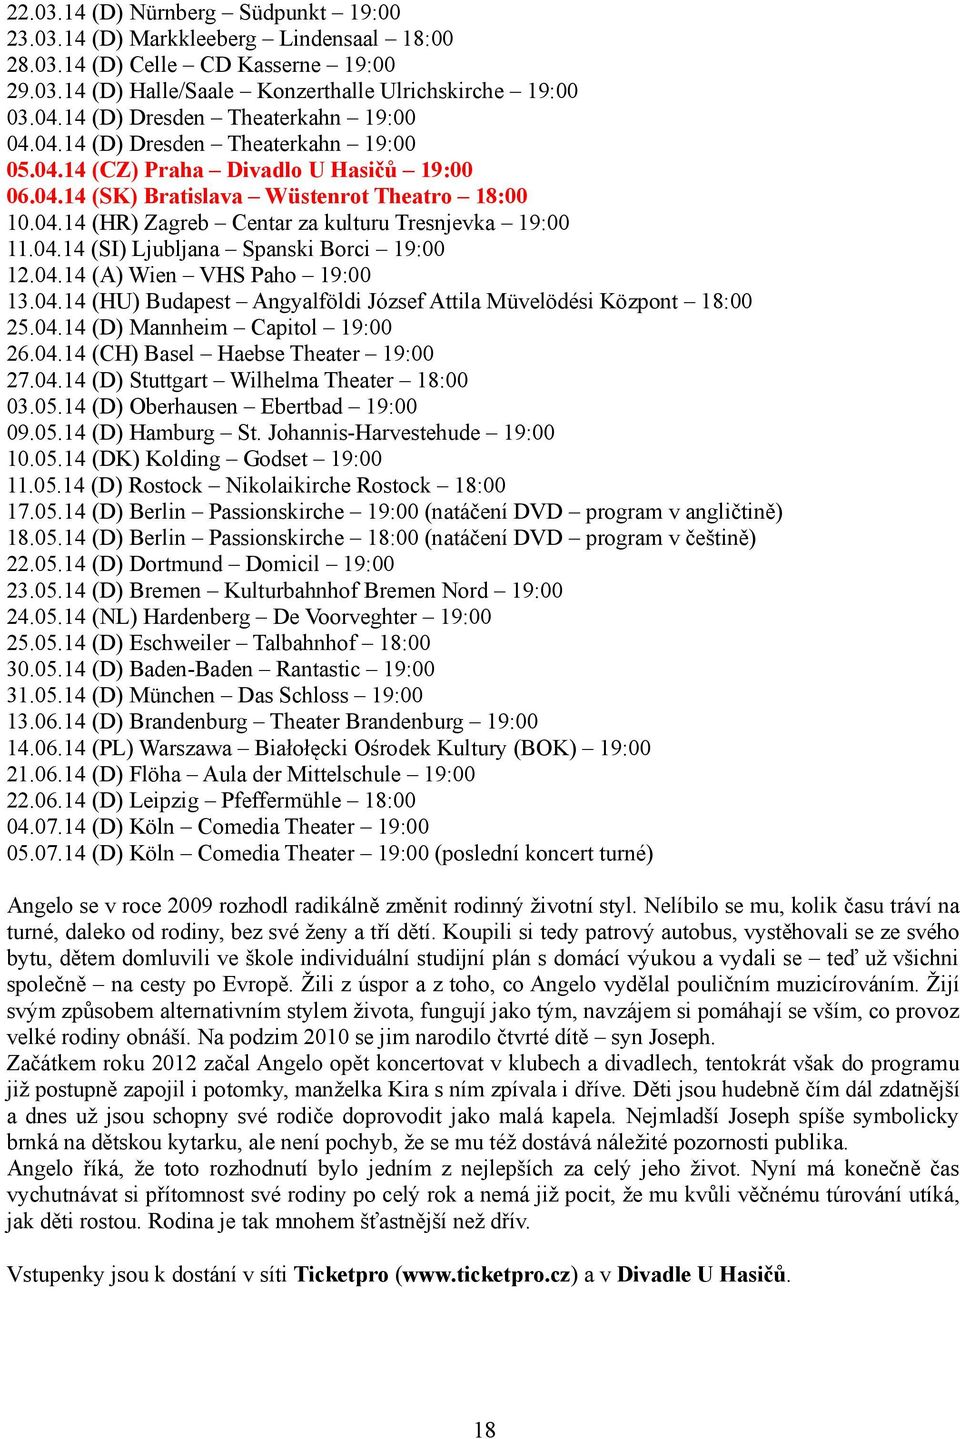 04.14 (SI) Ljubljana Spanski Borci 19:00 12.04.14 (A) Wien VHS Paho 19:00 13.04.14 (HU) Budapest Angyalföldi József Attila Müvelödési Központ 18:00 25.04.14 (D) Mannheim Capitol 19:00 26.04.14 (CH) Basel Haebse Theater 19:00 27.